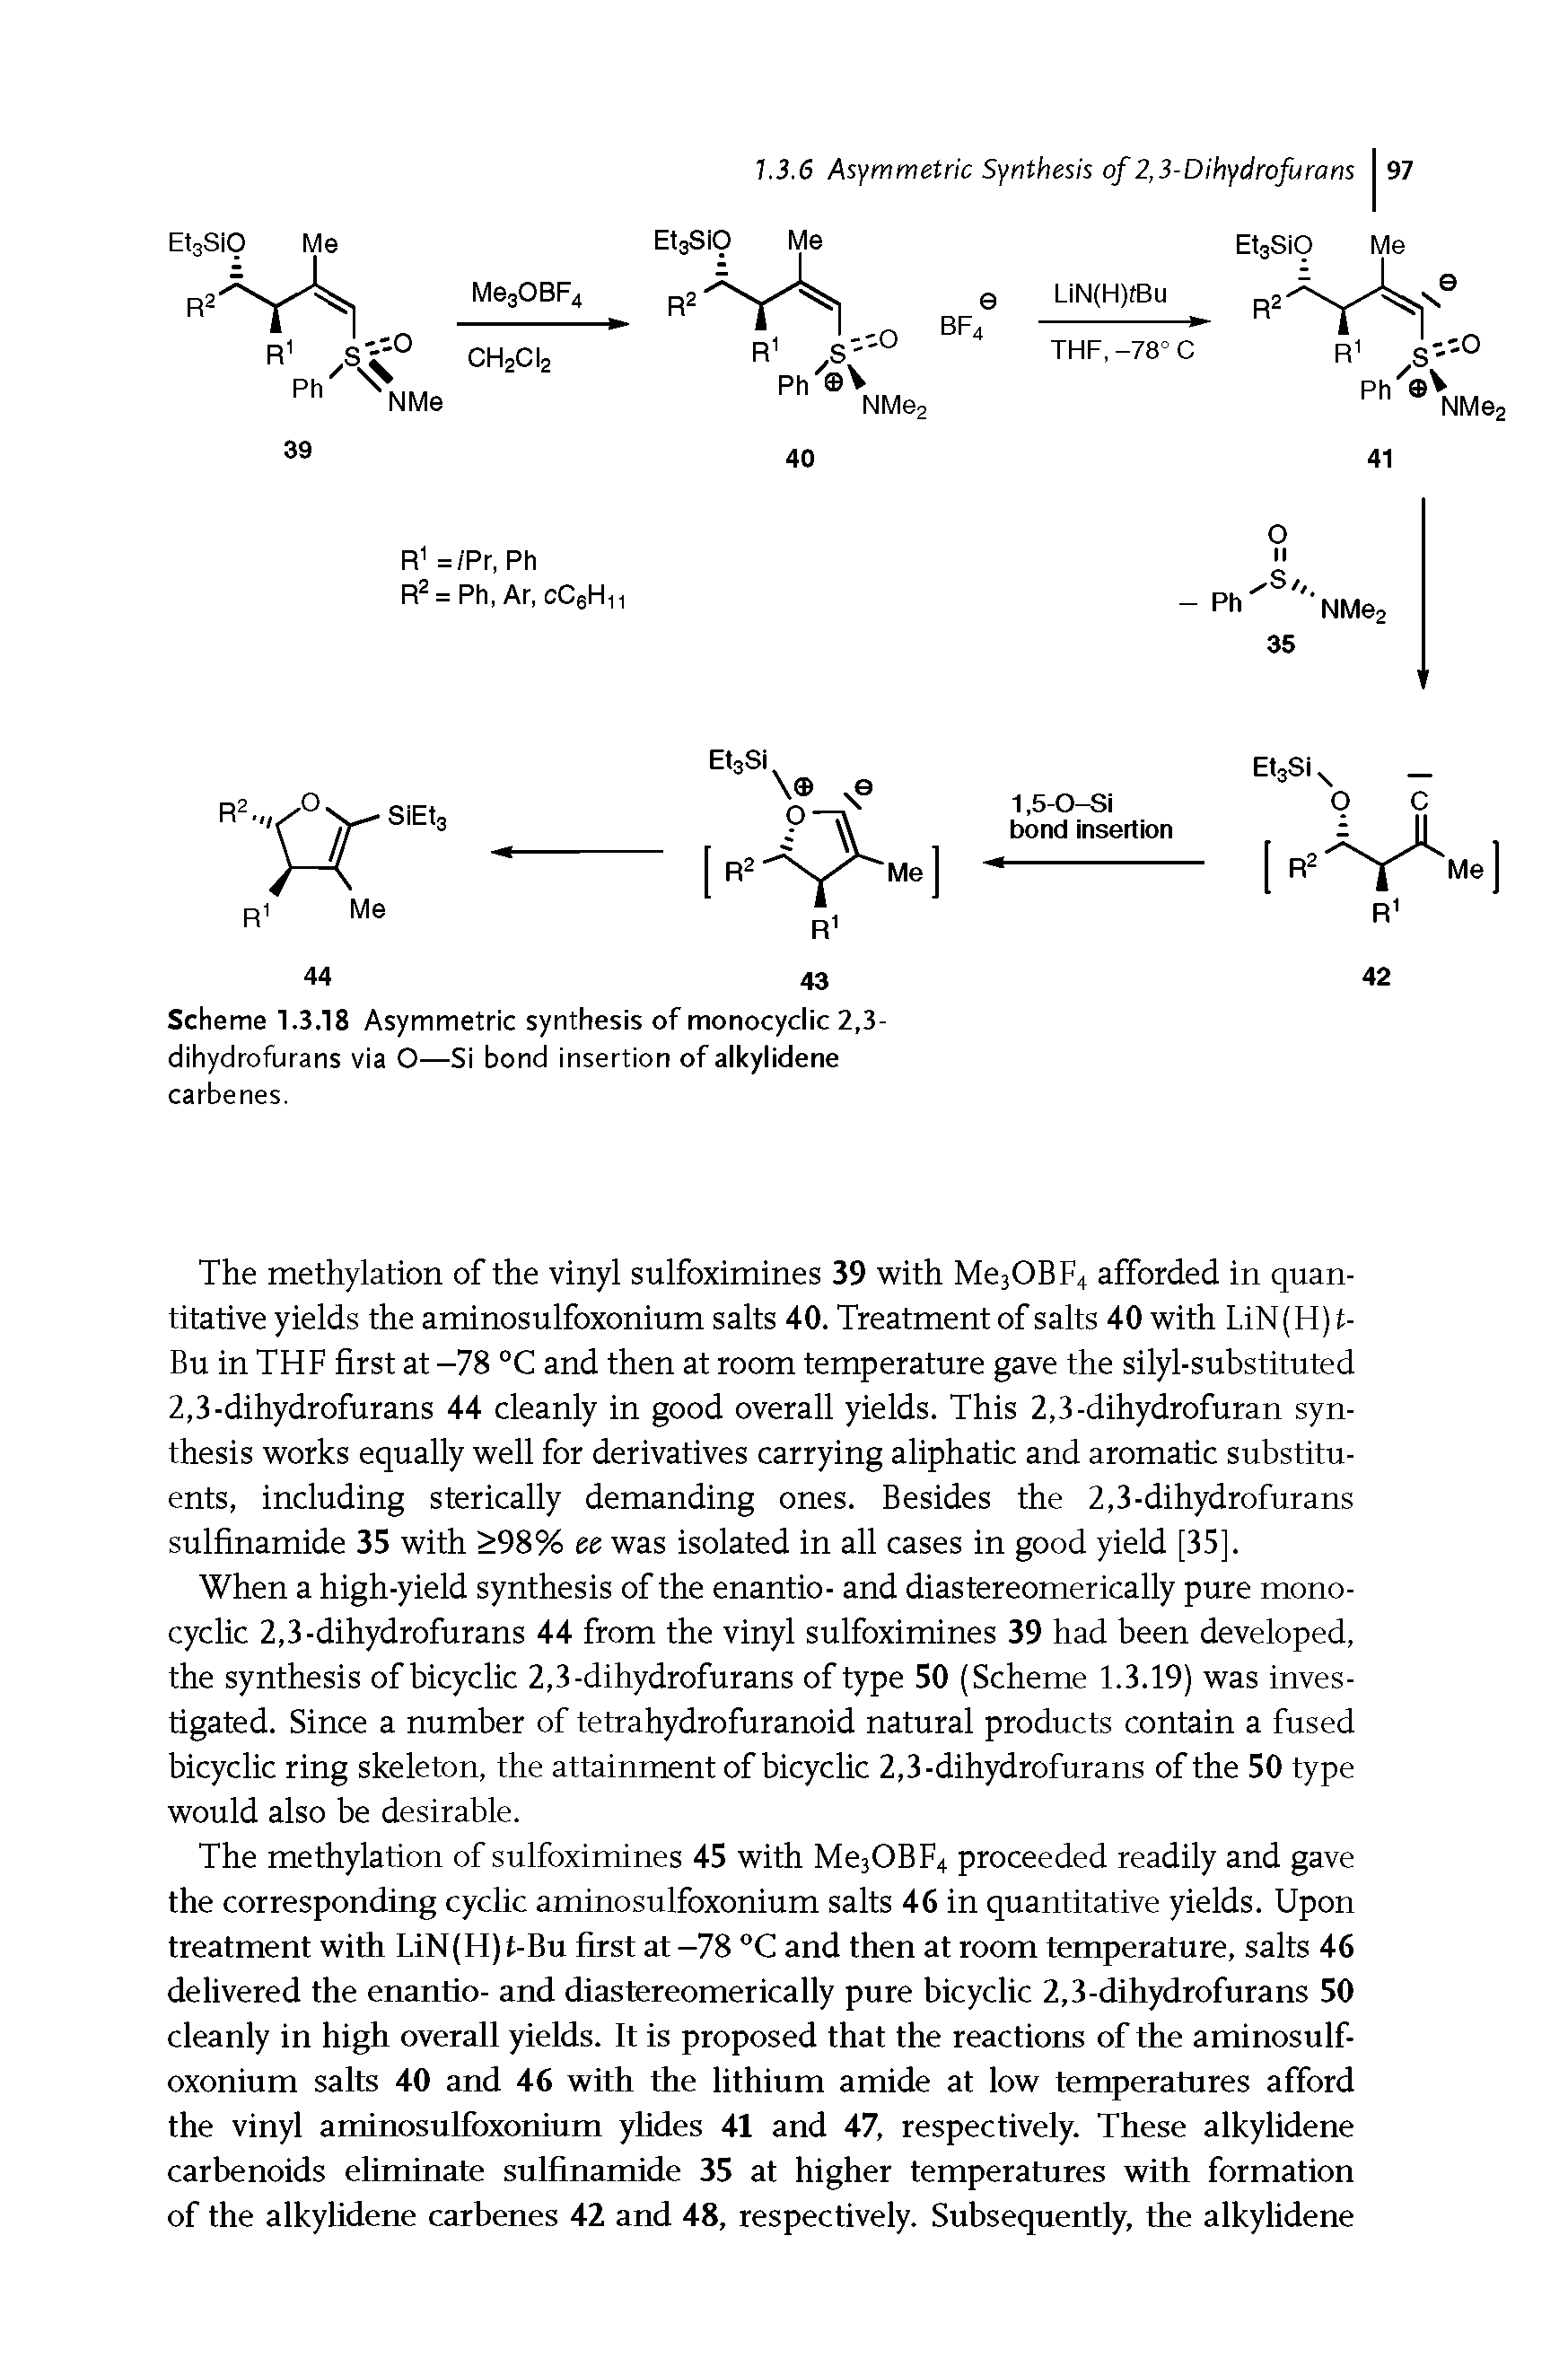 Scheme 1.3.18 Asymmetric synthesis of monocyclic 2,3-dihydrofurans via O—Si bond insertion of alkylidene carbenes.